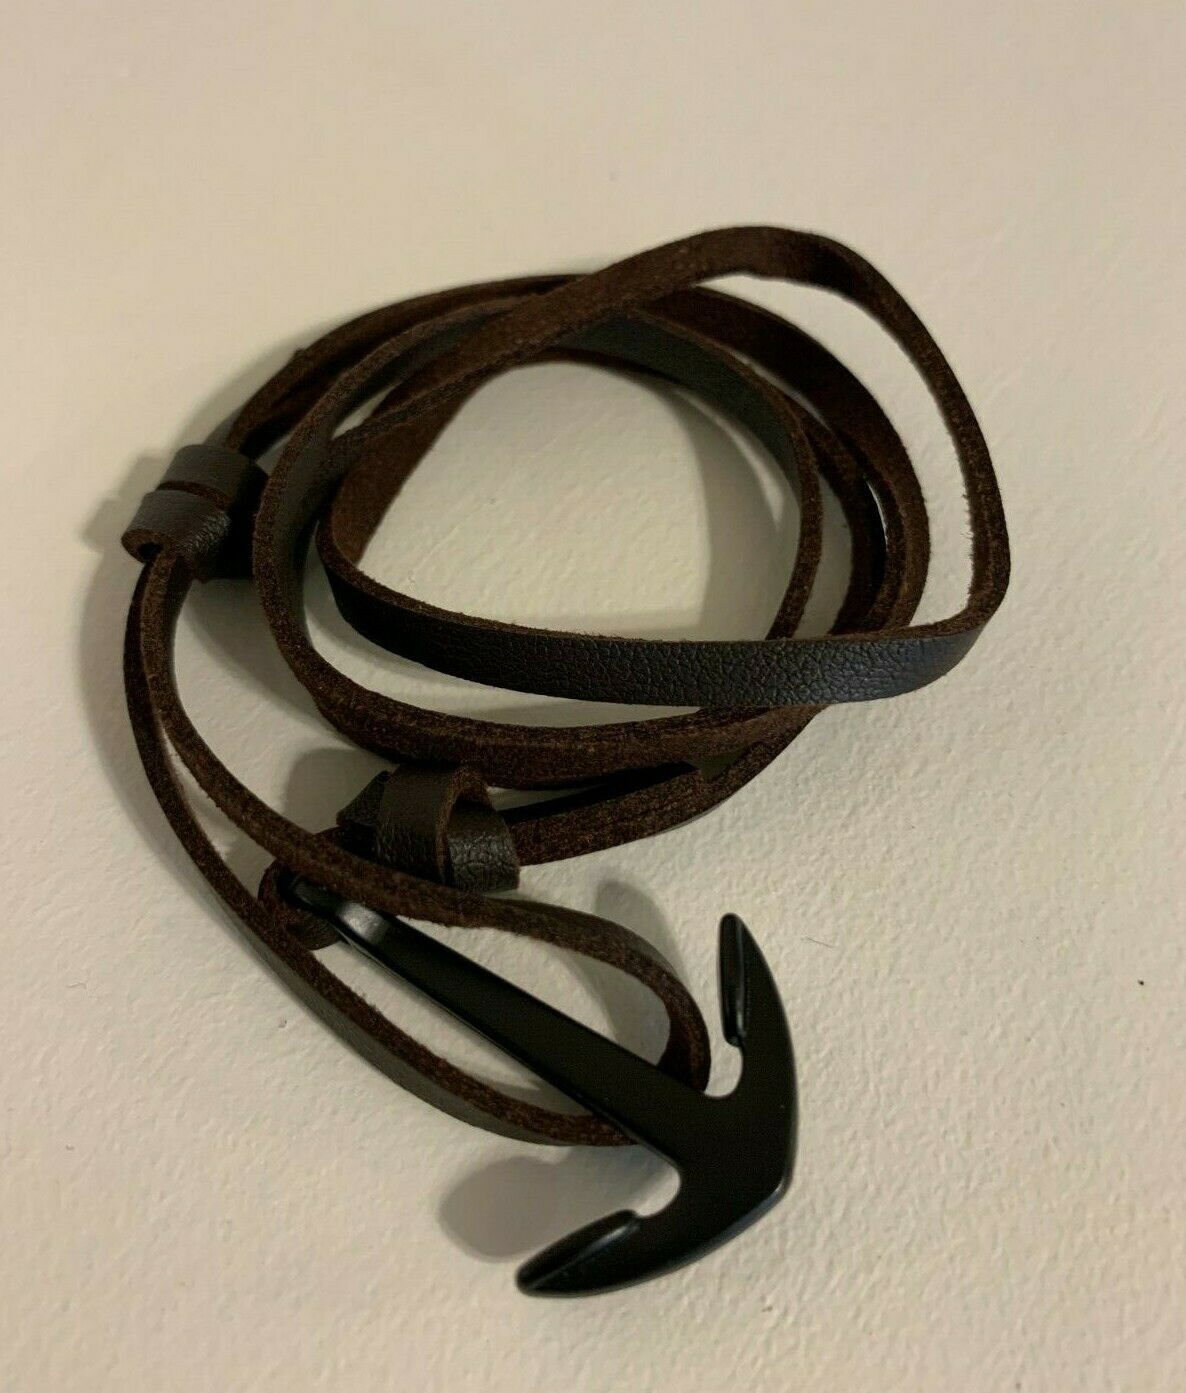 Anchor Cuff Bracelet - DkBrown/Black